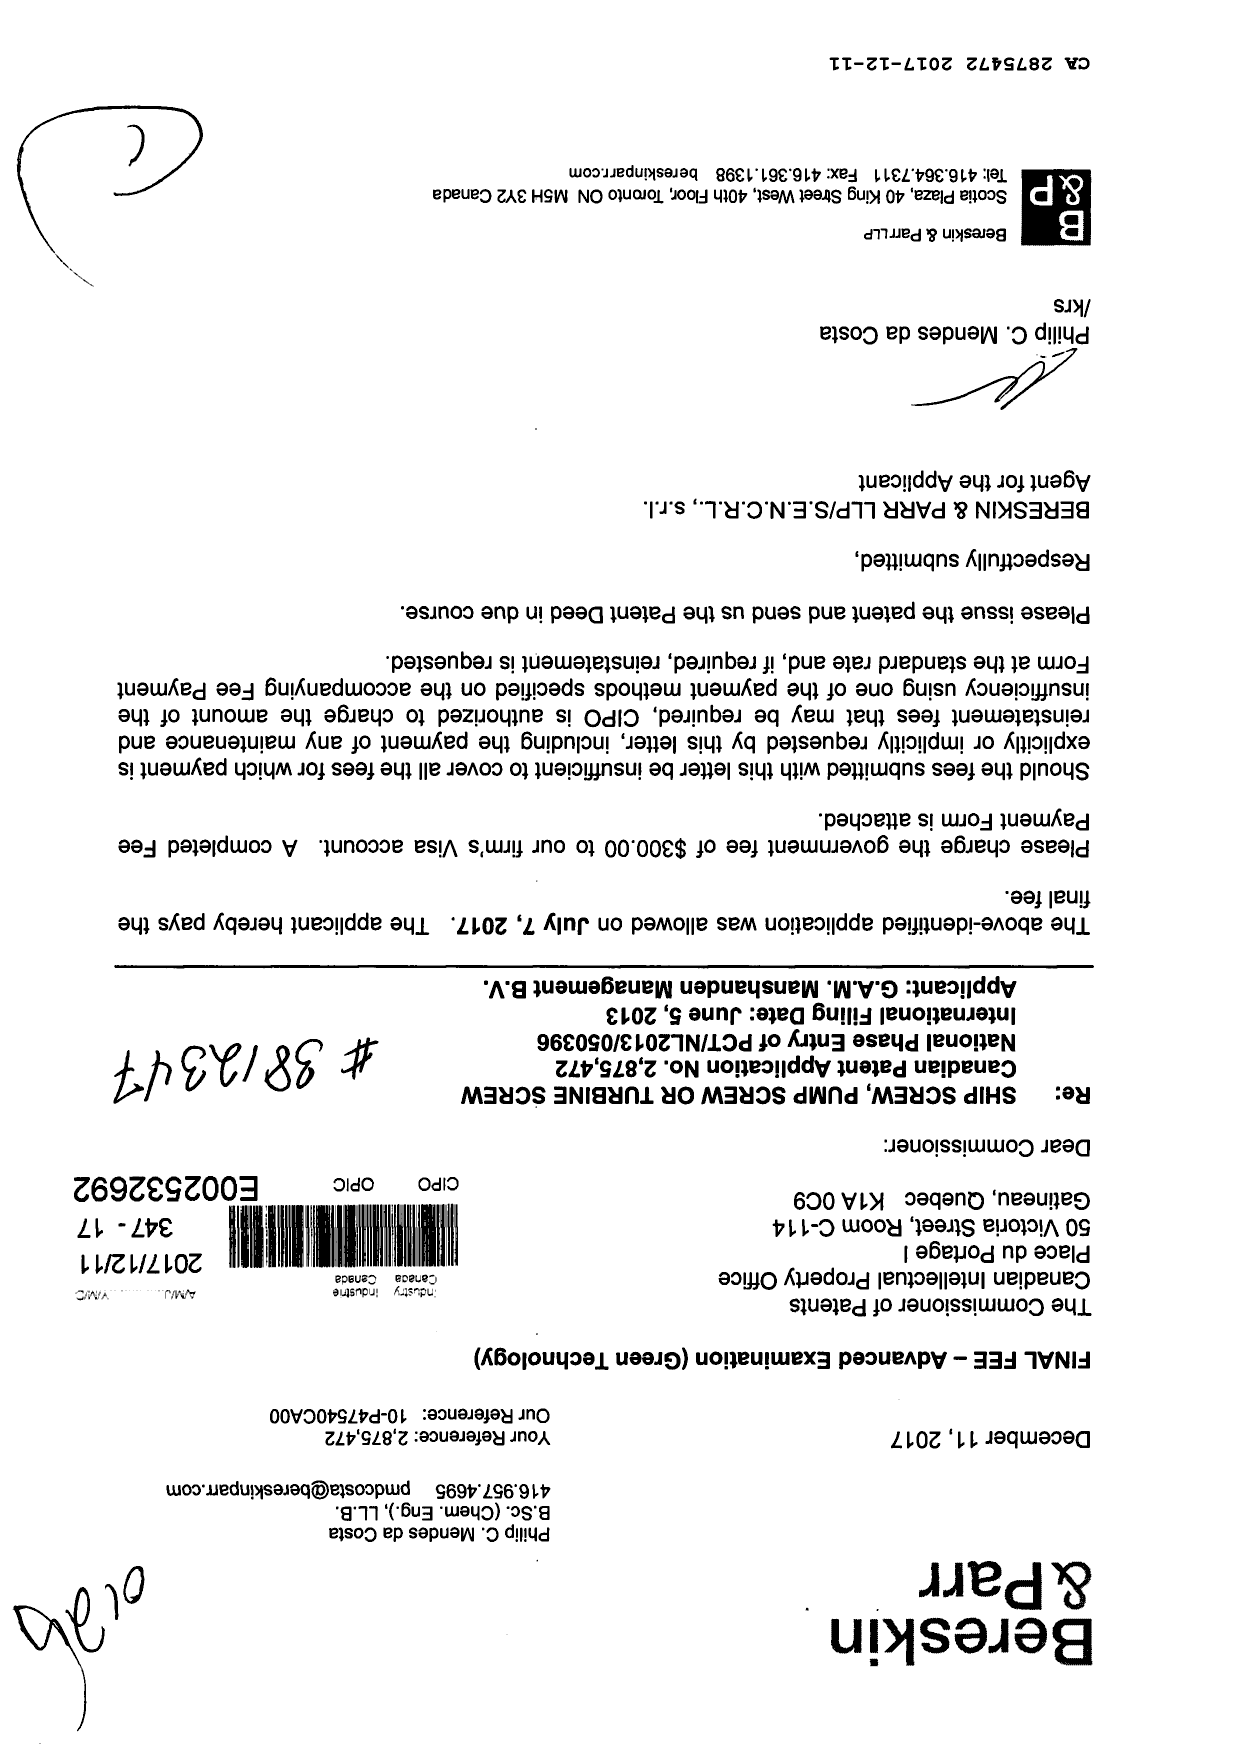 Canadian Patent Document 2875472. Correspondence 20161211. Image 1 of 1